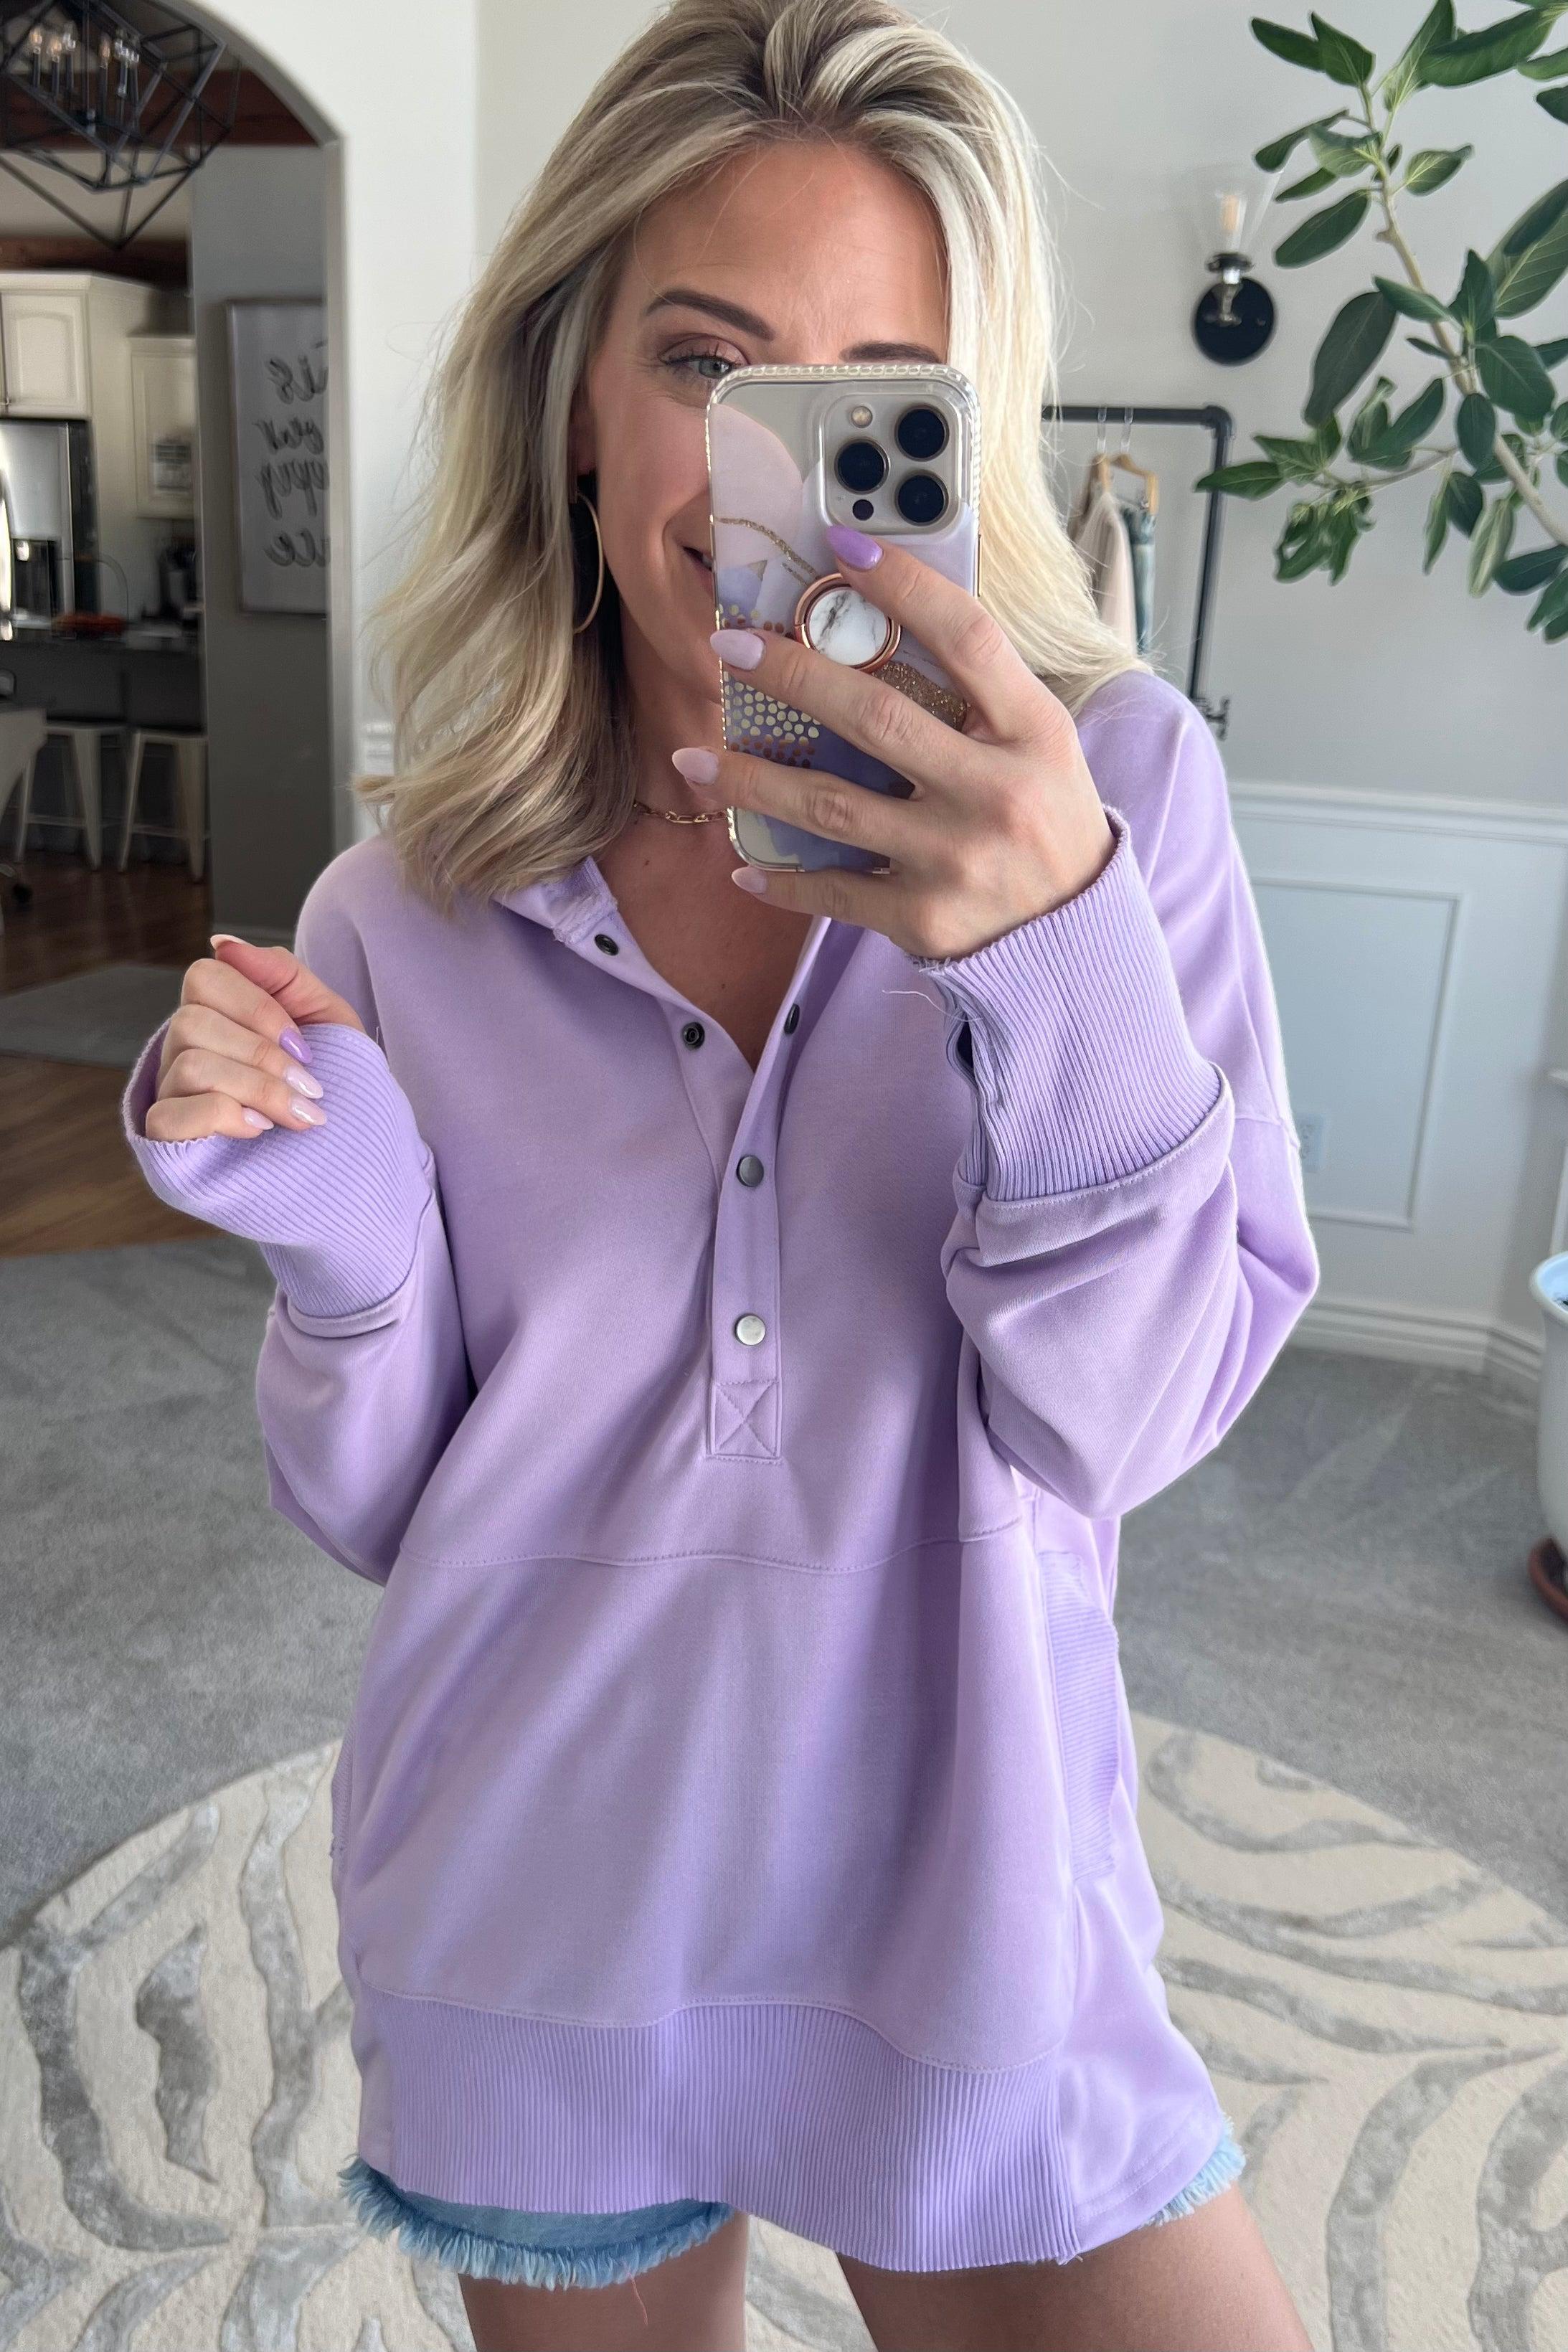 Verla Washed Plum Purple Dolman Sleeve Sweater Top